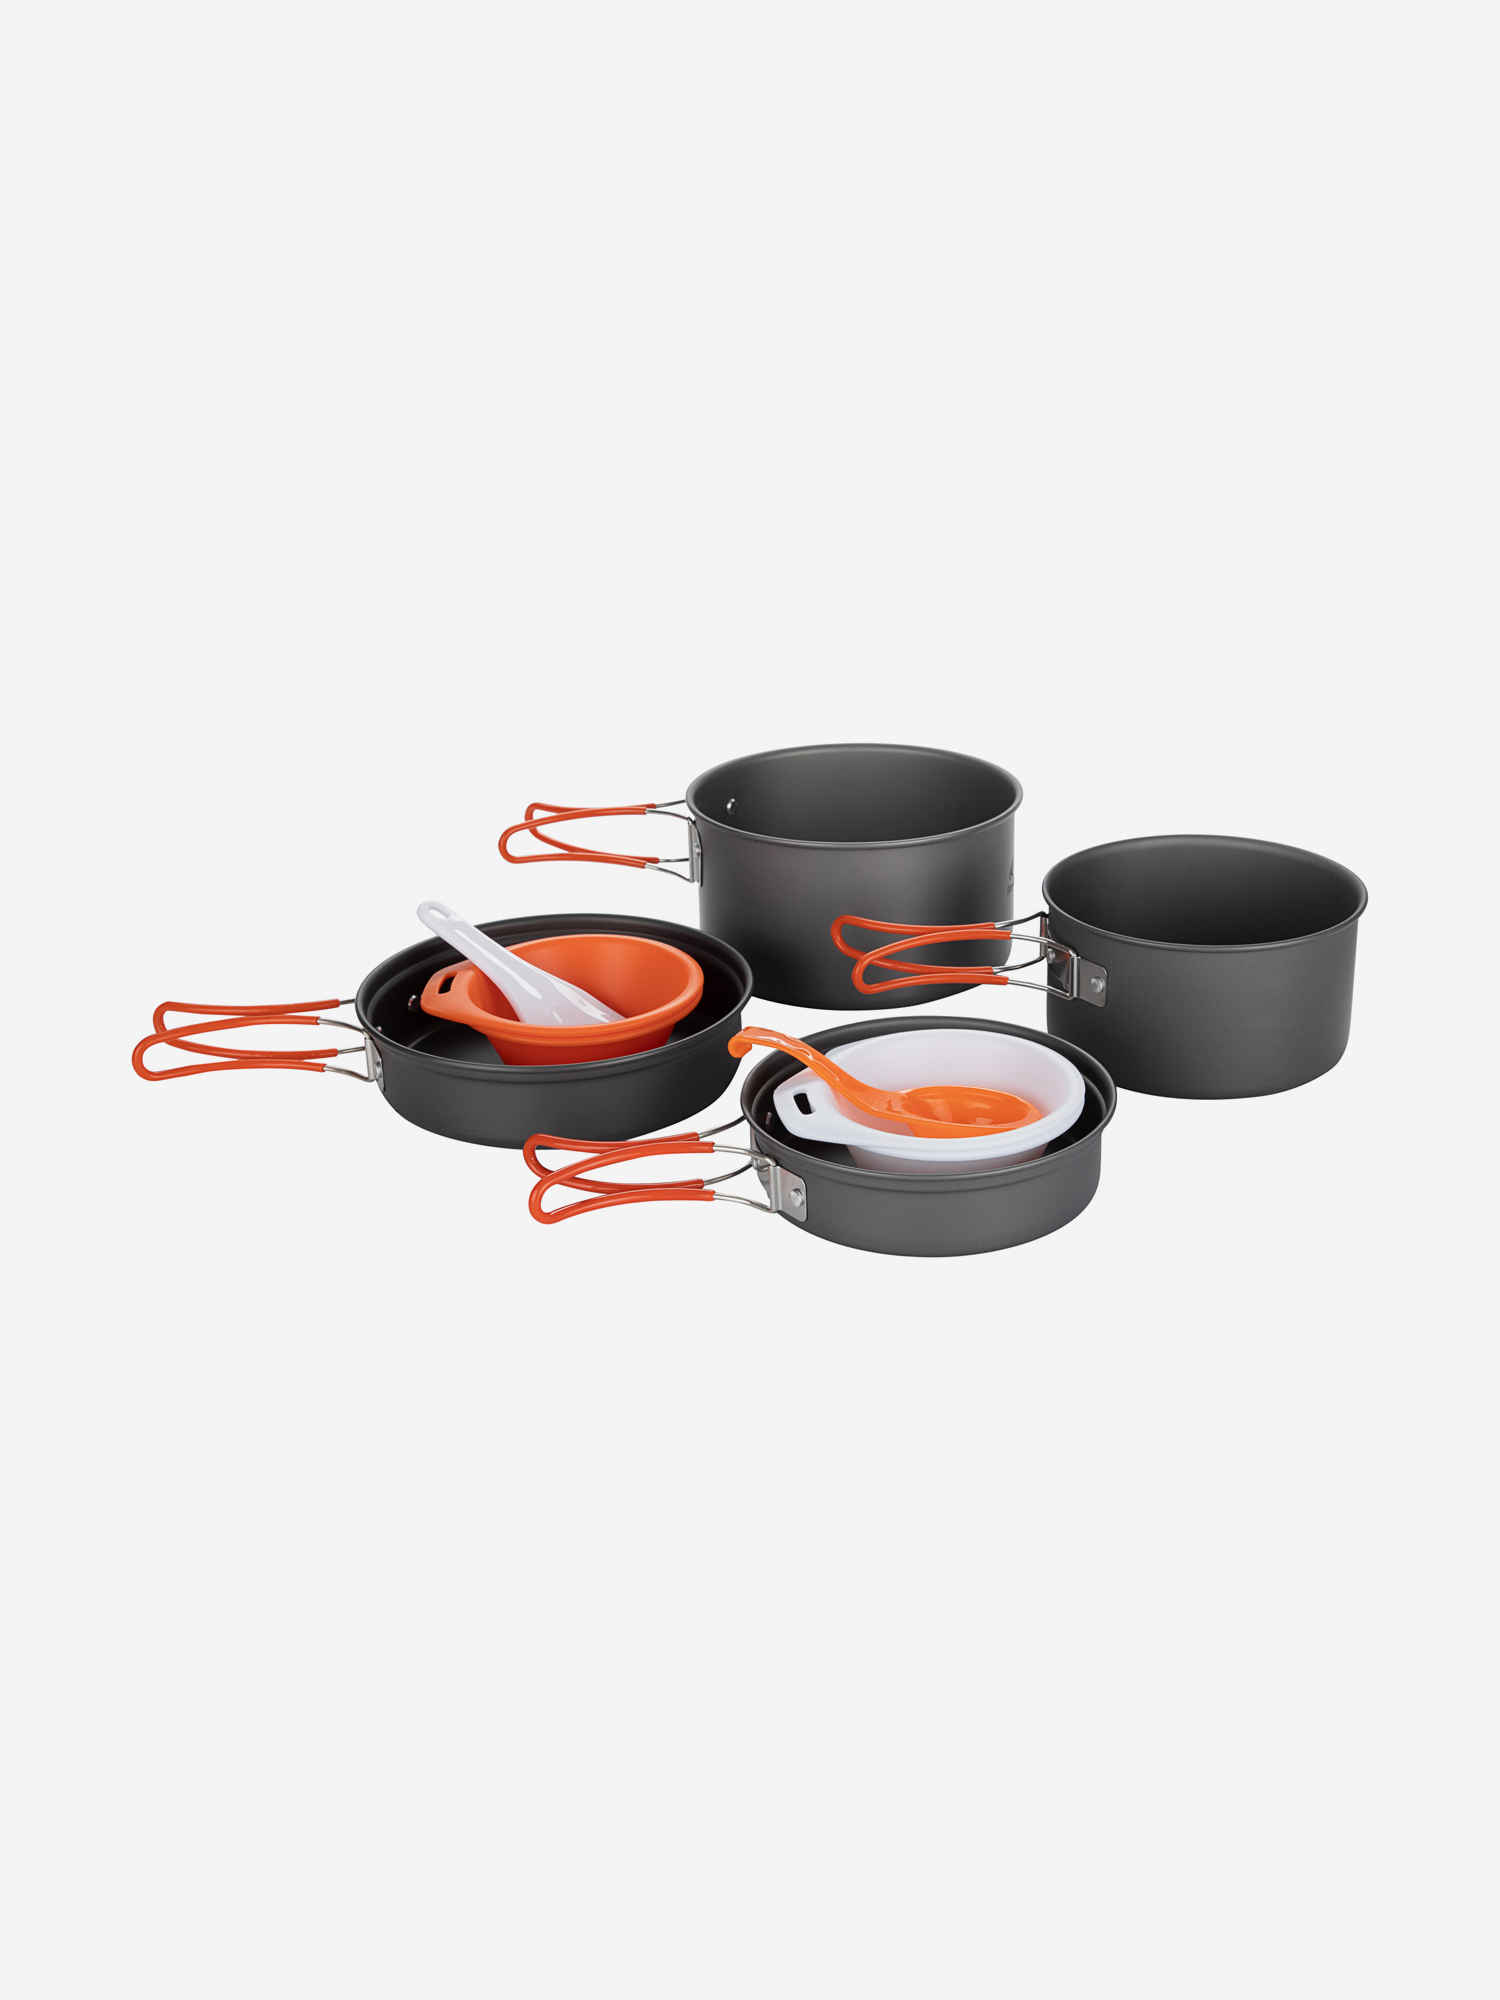 Набор посуды: 2 котелка, 2 сковороды Fire-Maple FMC-K7, Серый набор аэропорт fire rescue свет звук в коробке hs8005b